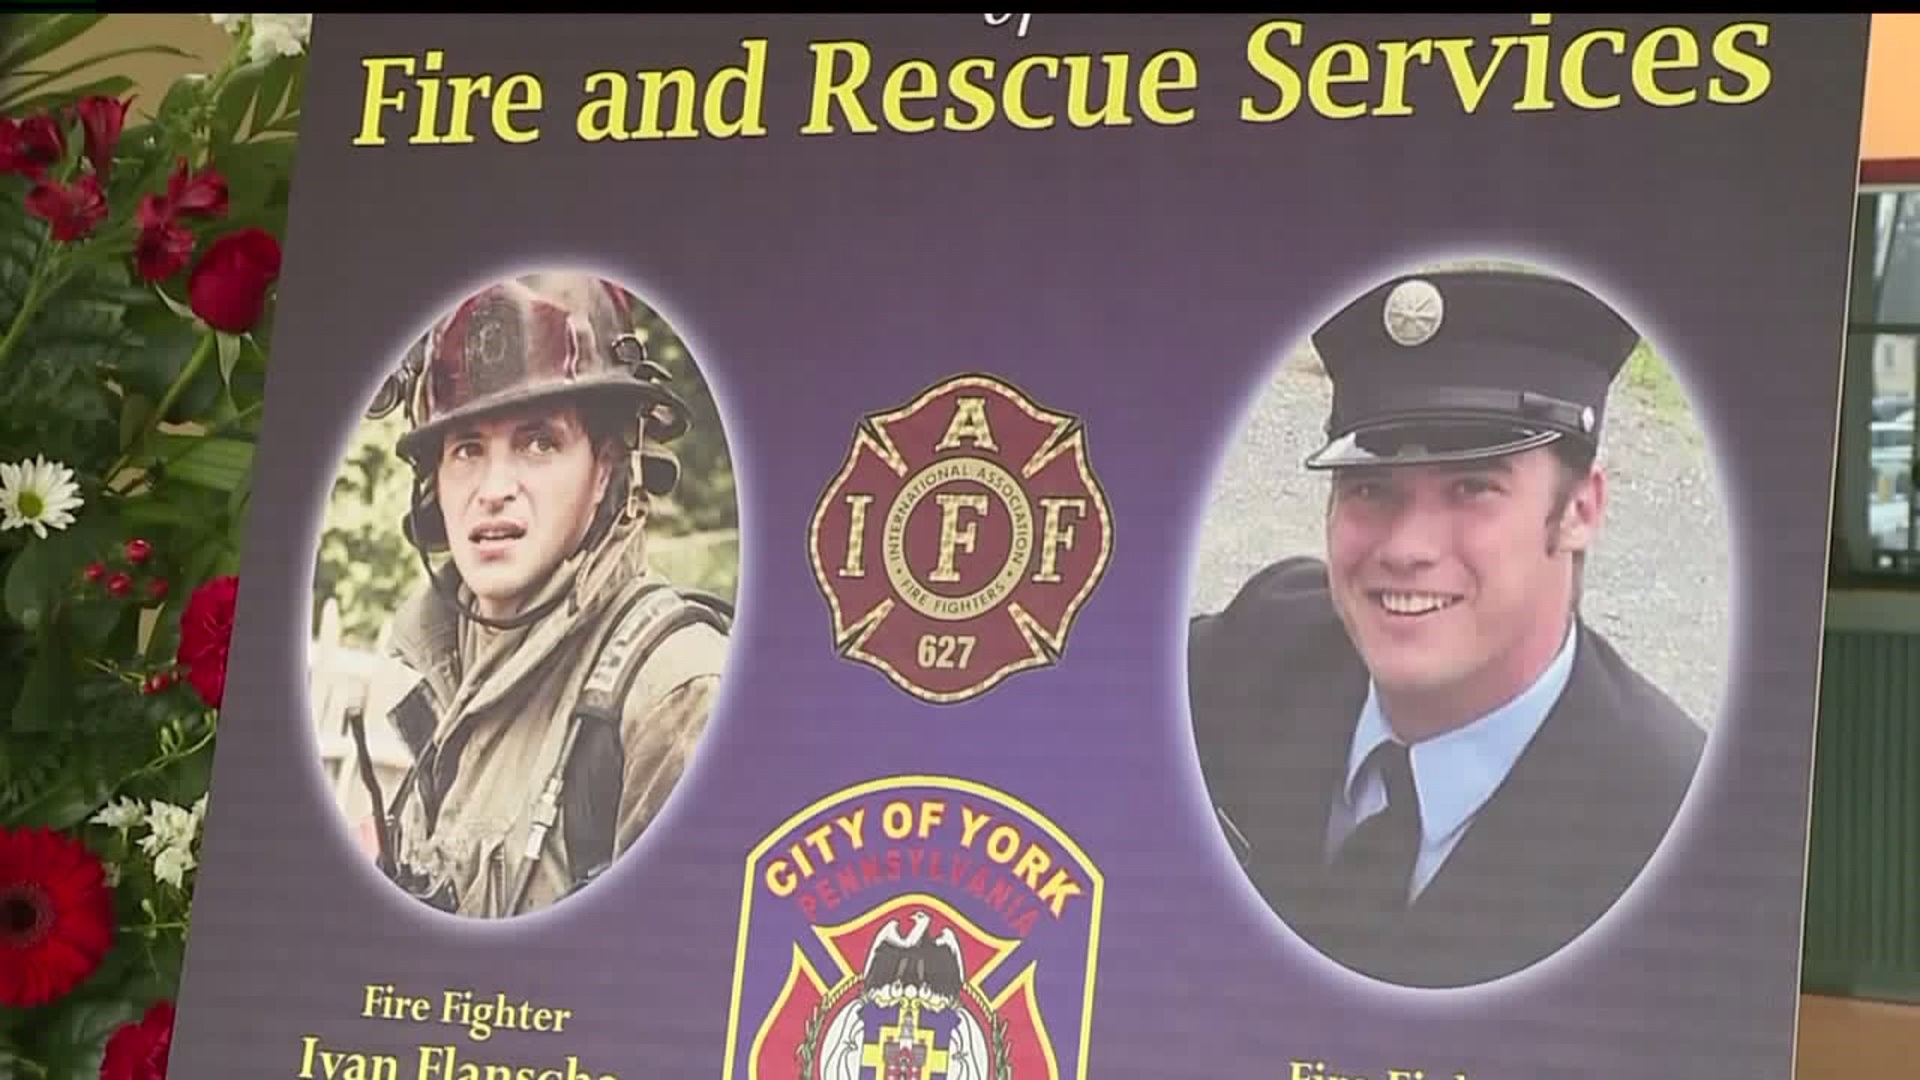 Badges of fallen York Firefighters retired